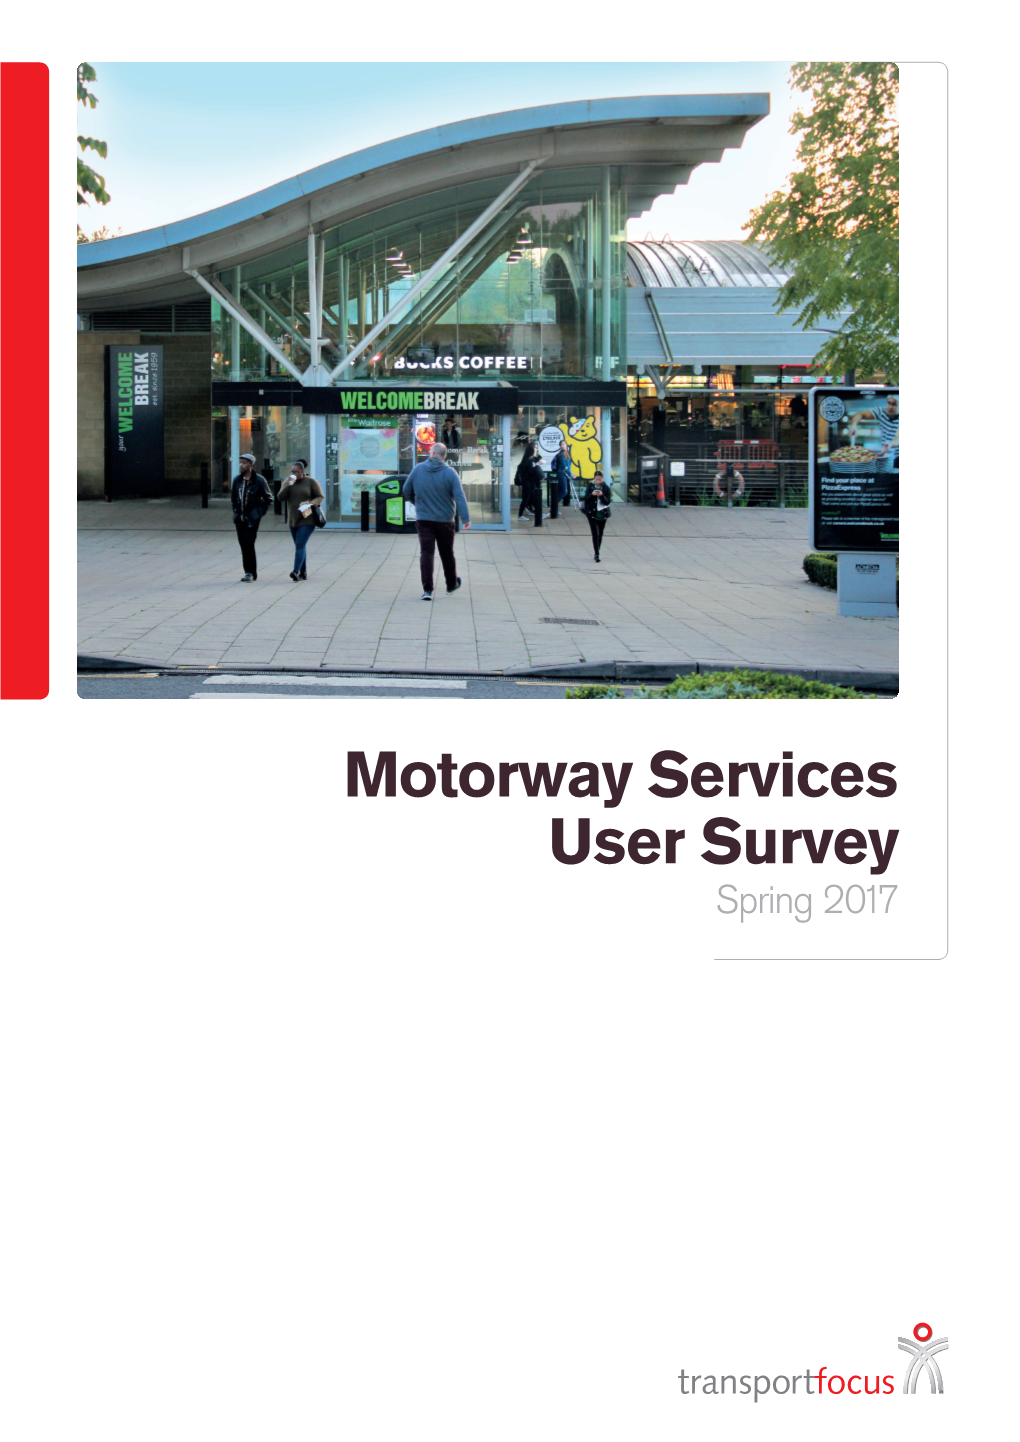 Motorway Services User Survey Spring 2017 Motorway Services User Survey